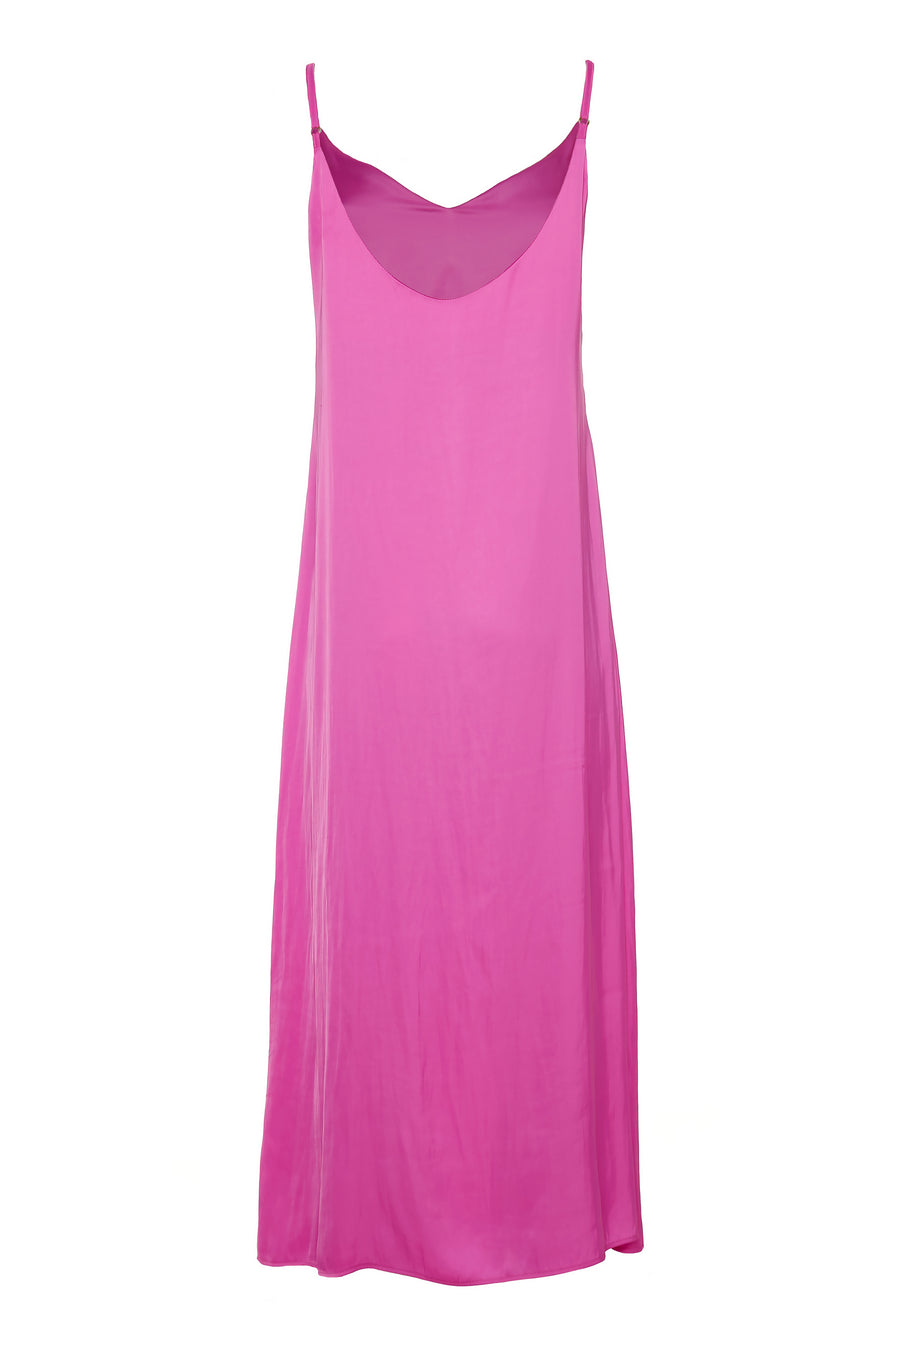 NMW Dorothea Dress (Pink)